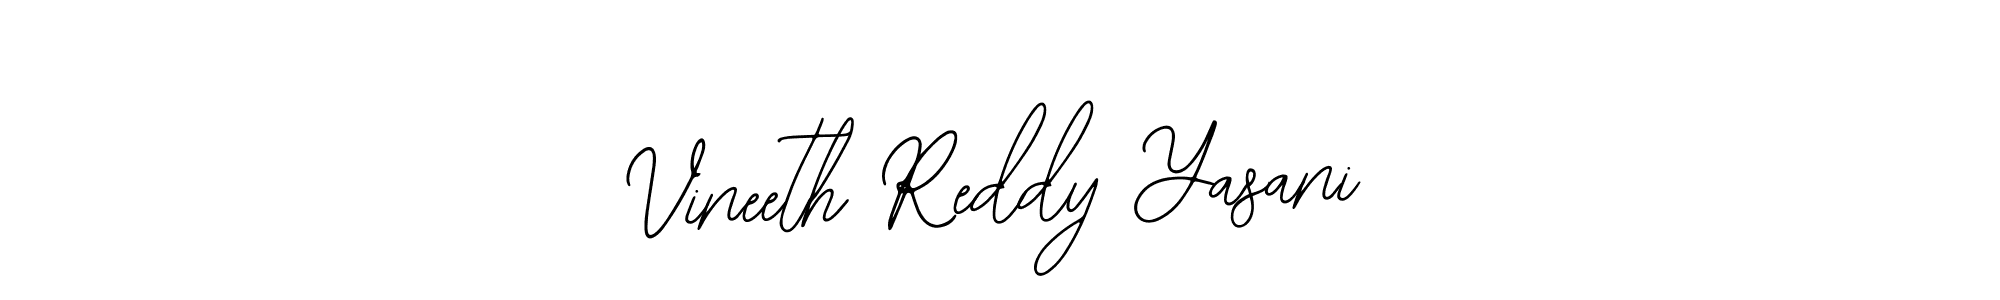 How to Draw Vineeth Reddy Yasani signature style? Bearetta-2O07w is a latest design signature styles for name Vineeth Reddy Yasani. Vineeth Reddy Yasani signature style 12 images and pictures png